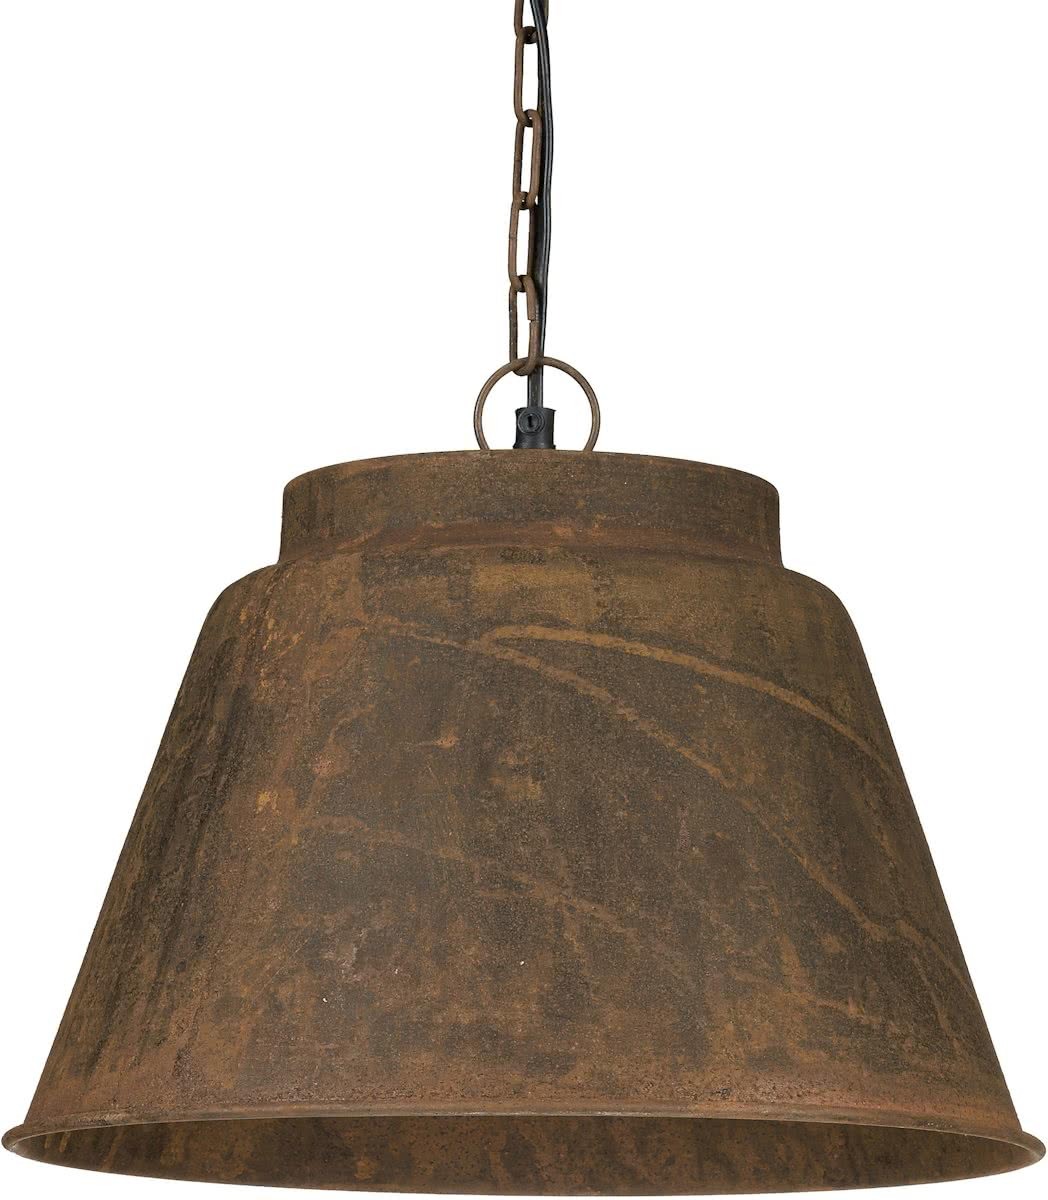 Relaxdays Hanglamp roest industrieel bruin pendellamp plafondlamp corrosie geoxideerd